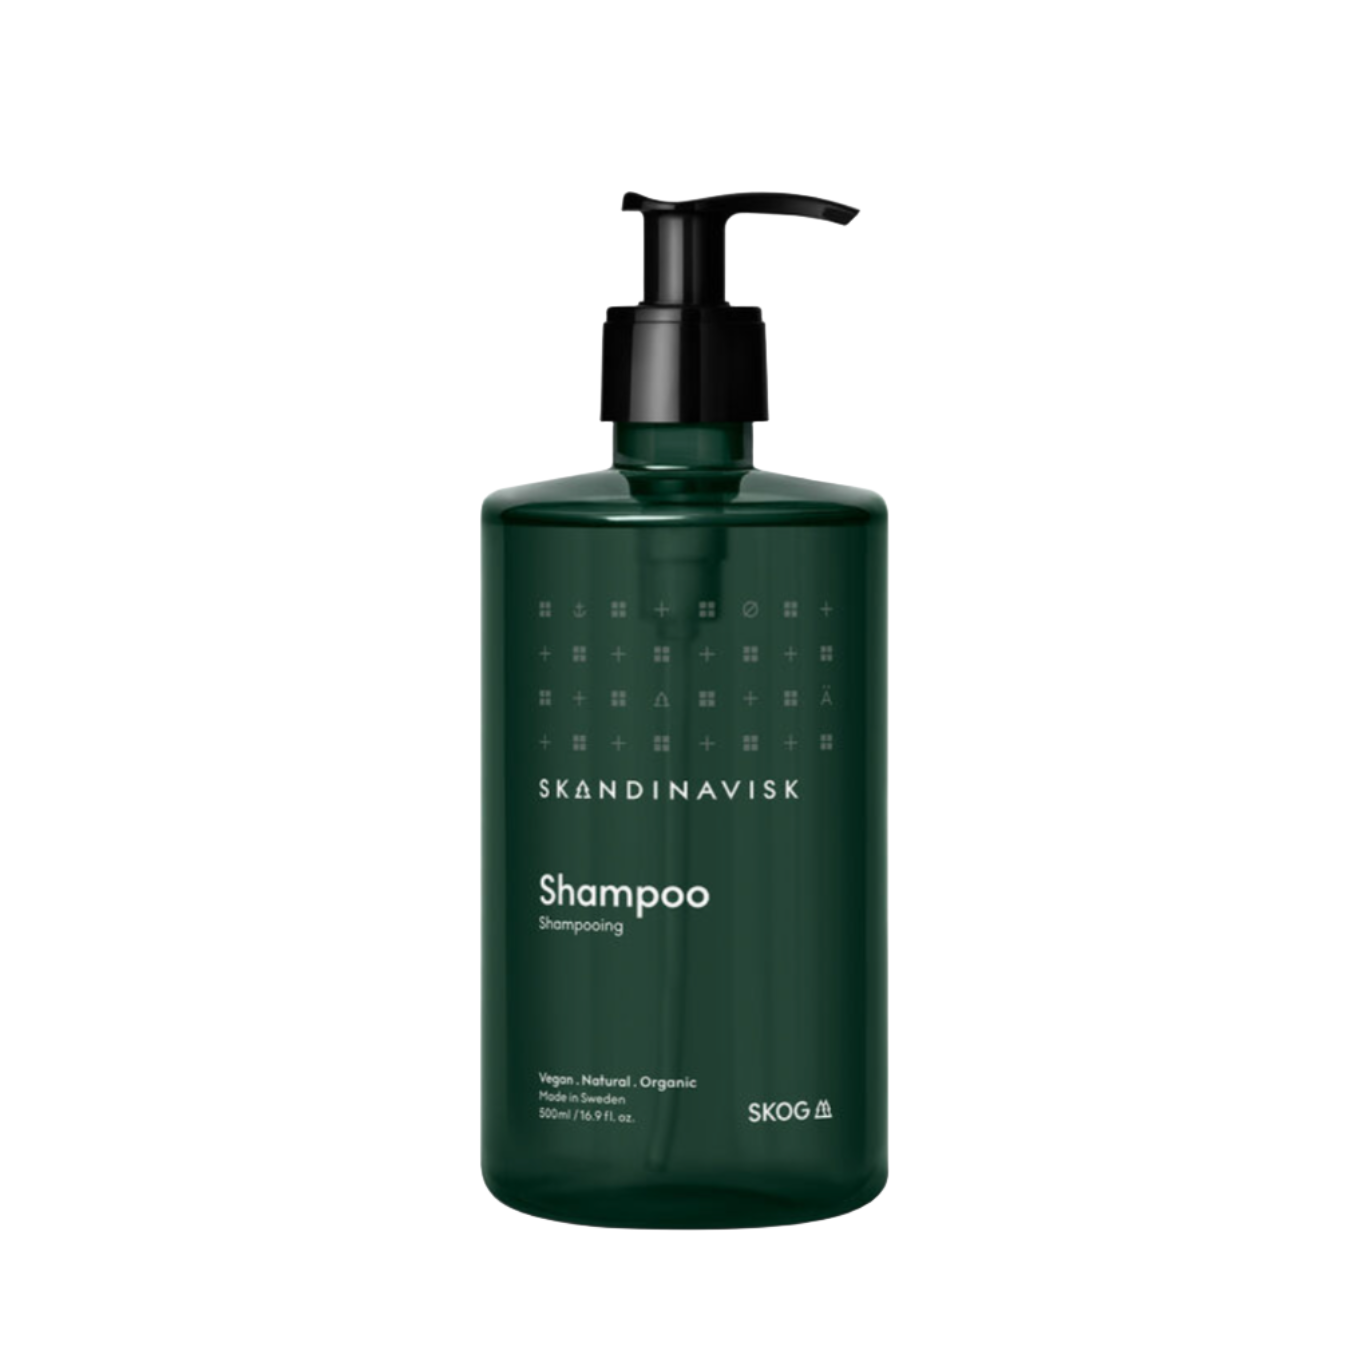 Shampoo Skog 500ml, New